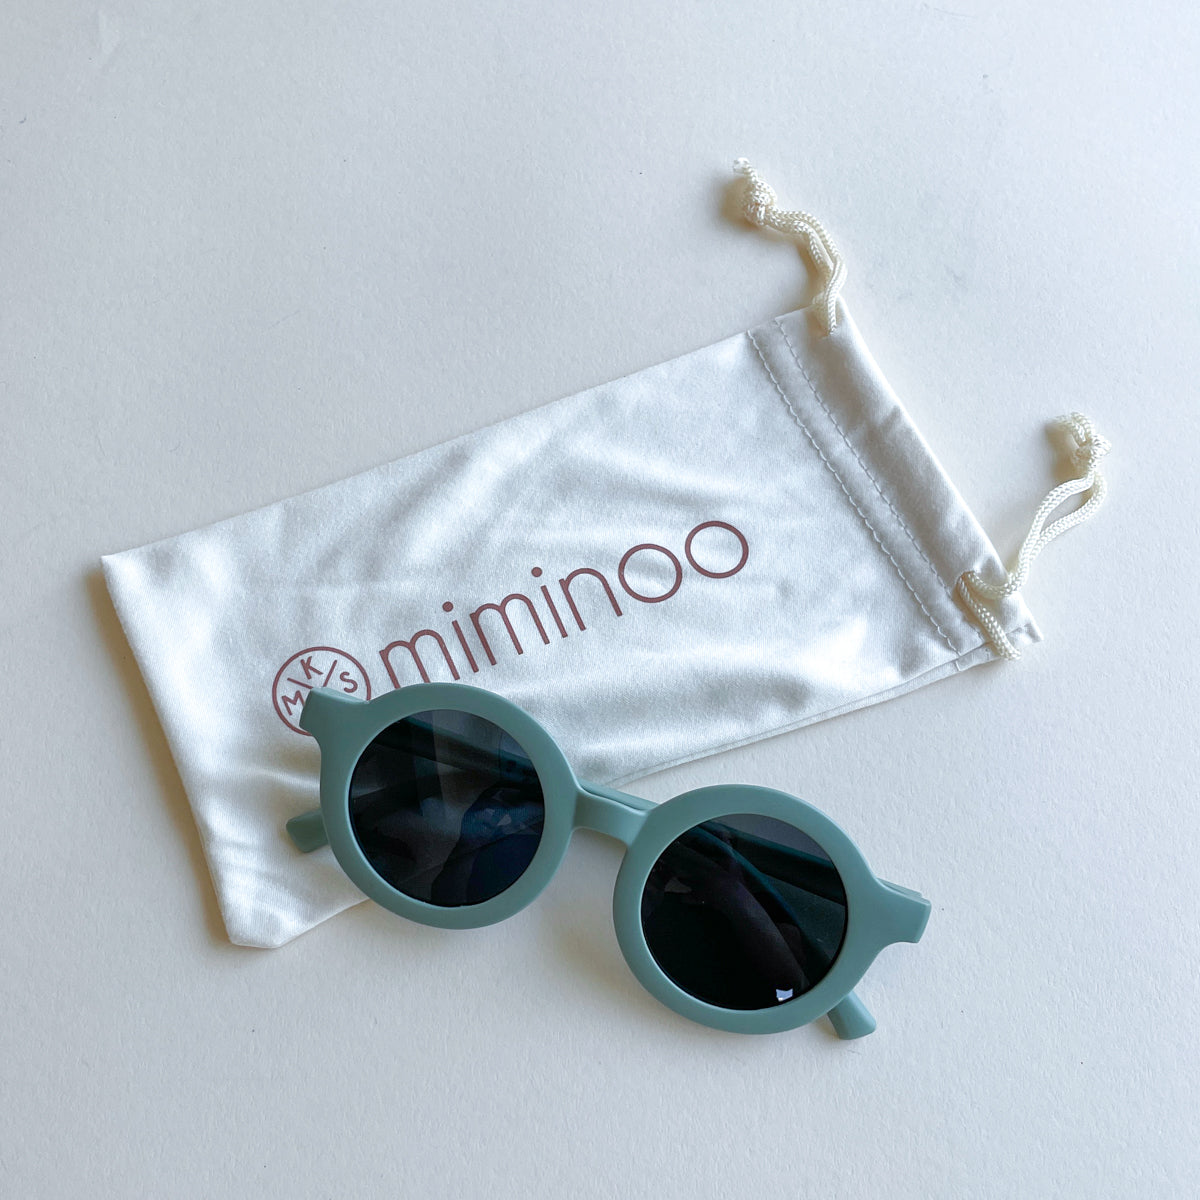 New Flexible, Resistant & Polarized UV 400 Kids Sunglasses Sage